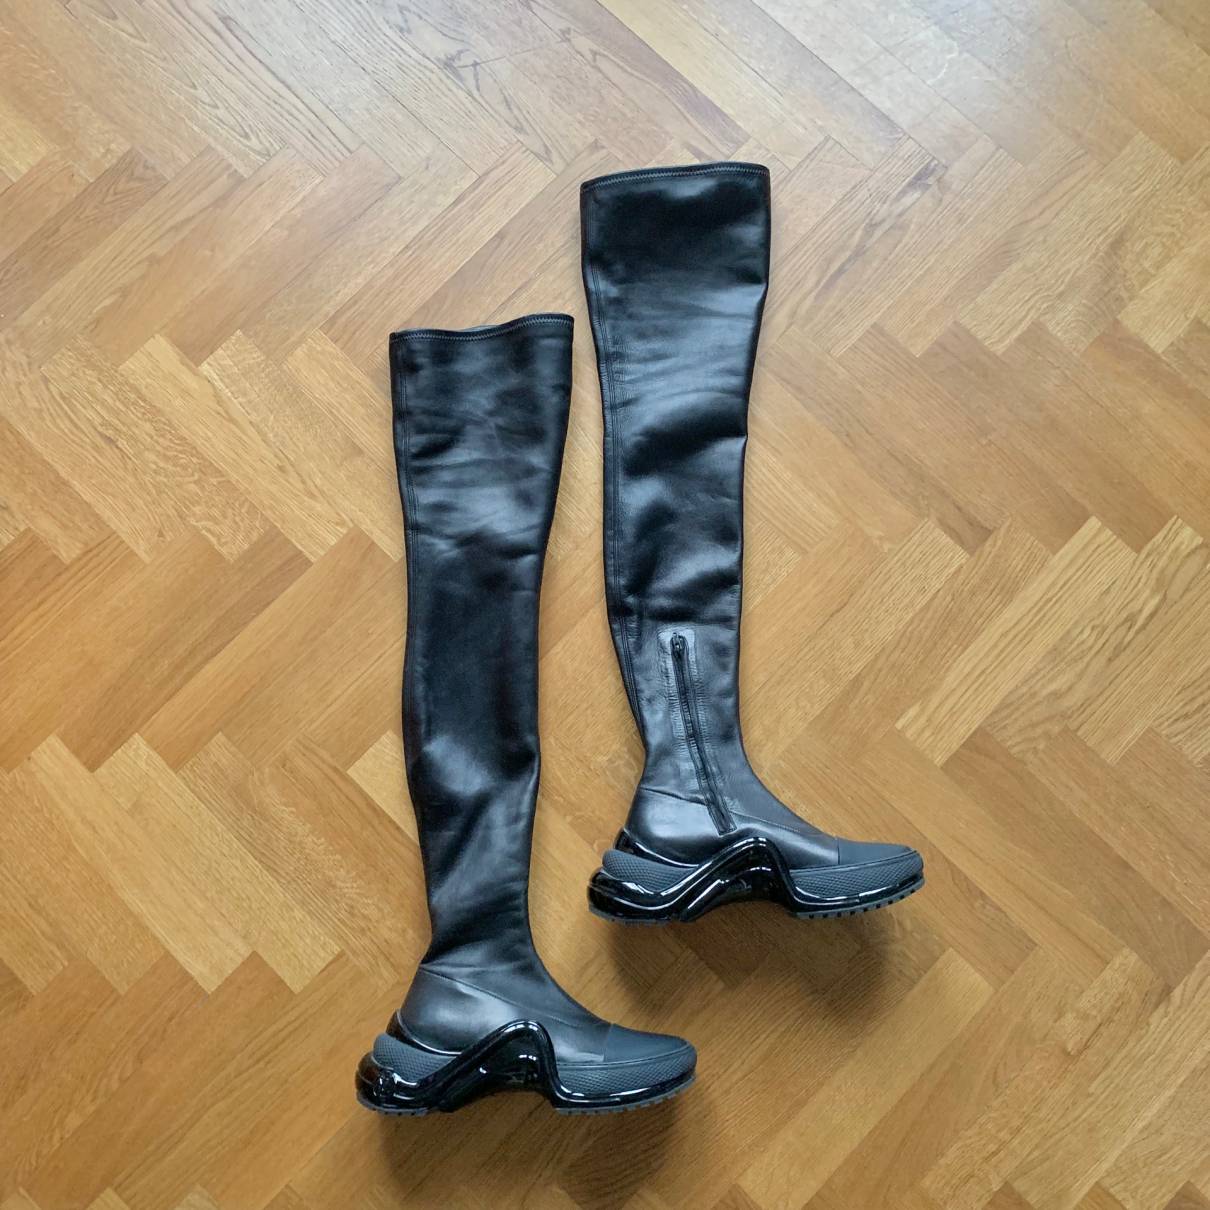 Louis Vuitton - Authenticated Archlight Boots - Leather Black Plain for Women, Never Worn